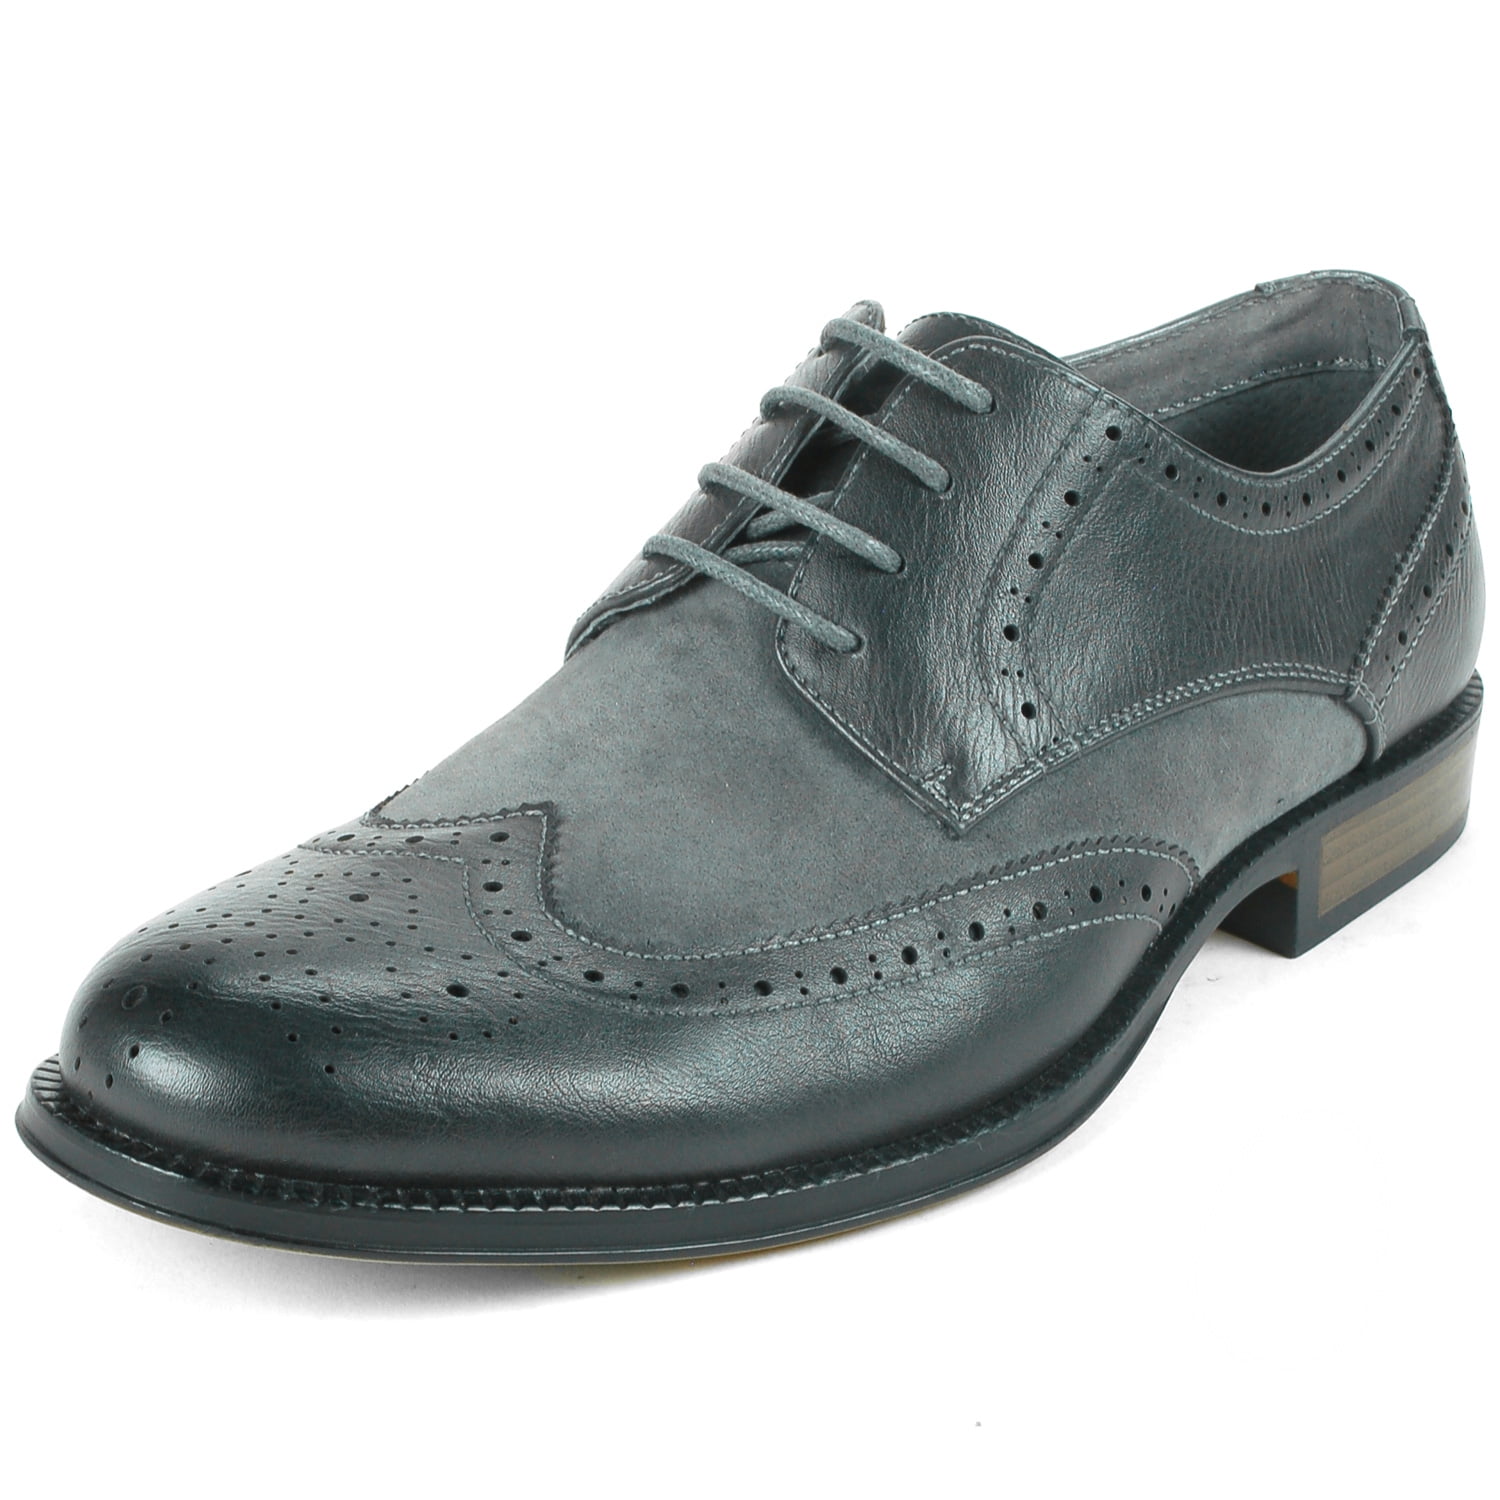 gray dress shoes